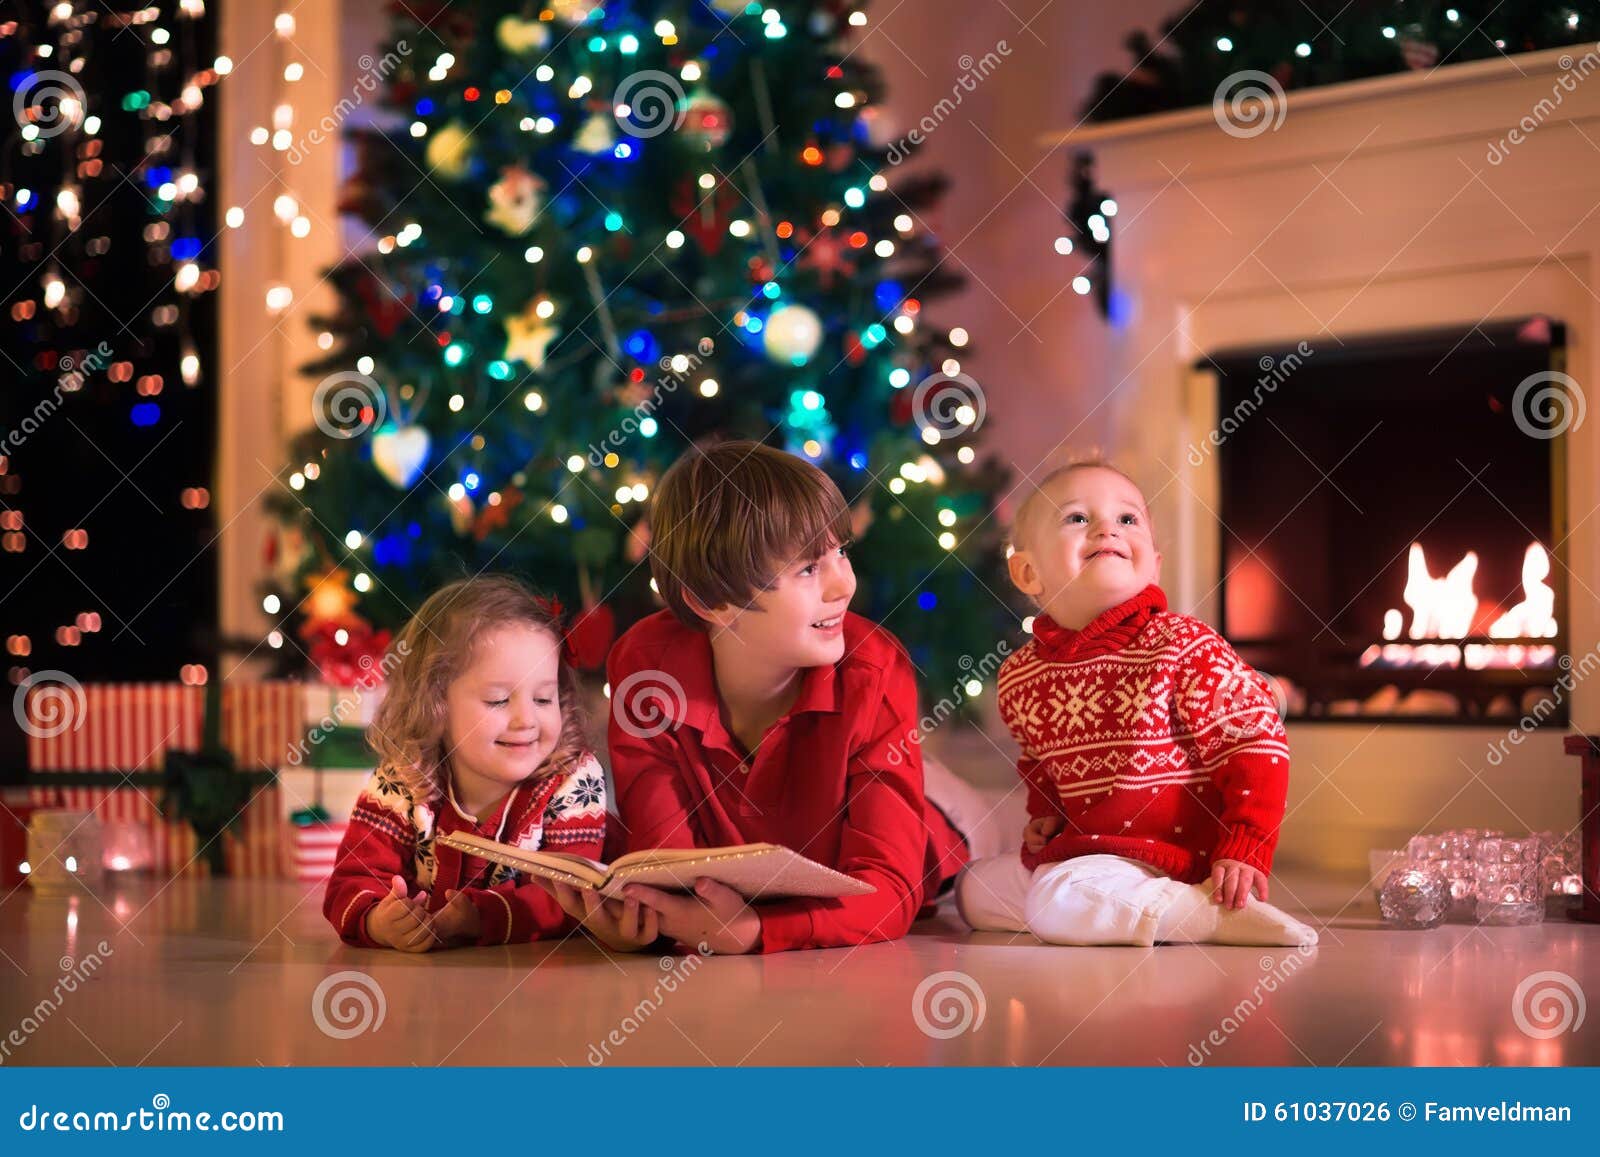 Kids Playing At Fireplace On Christmas Eve Stock Photo - Image: 61037026